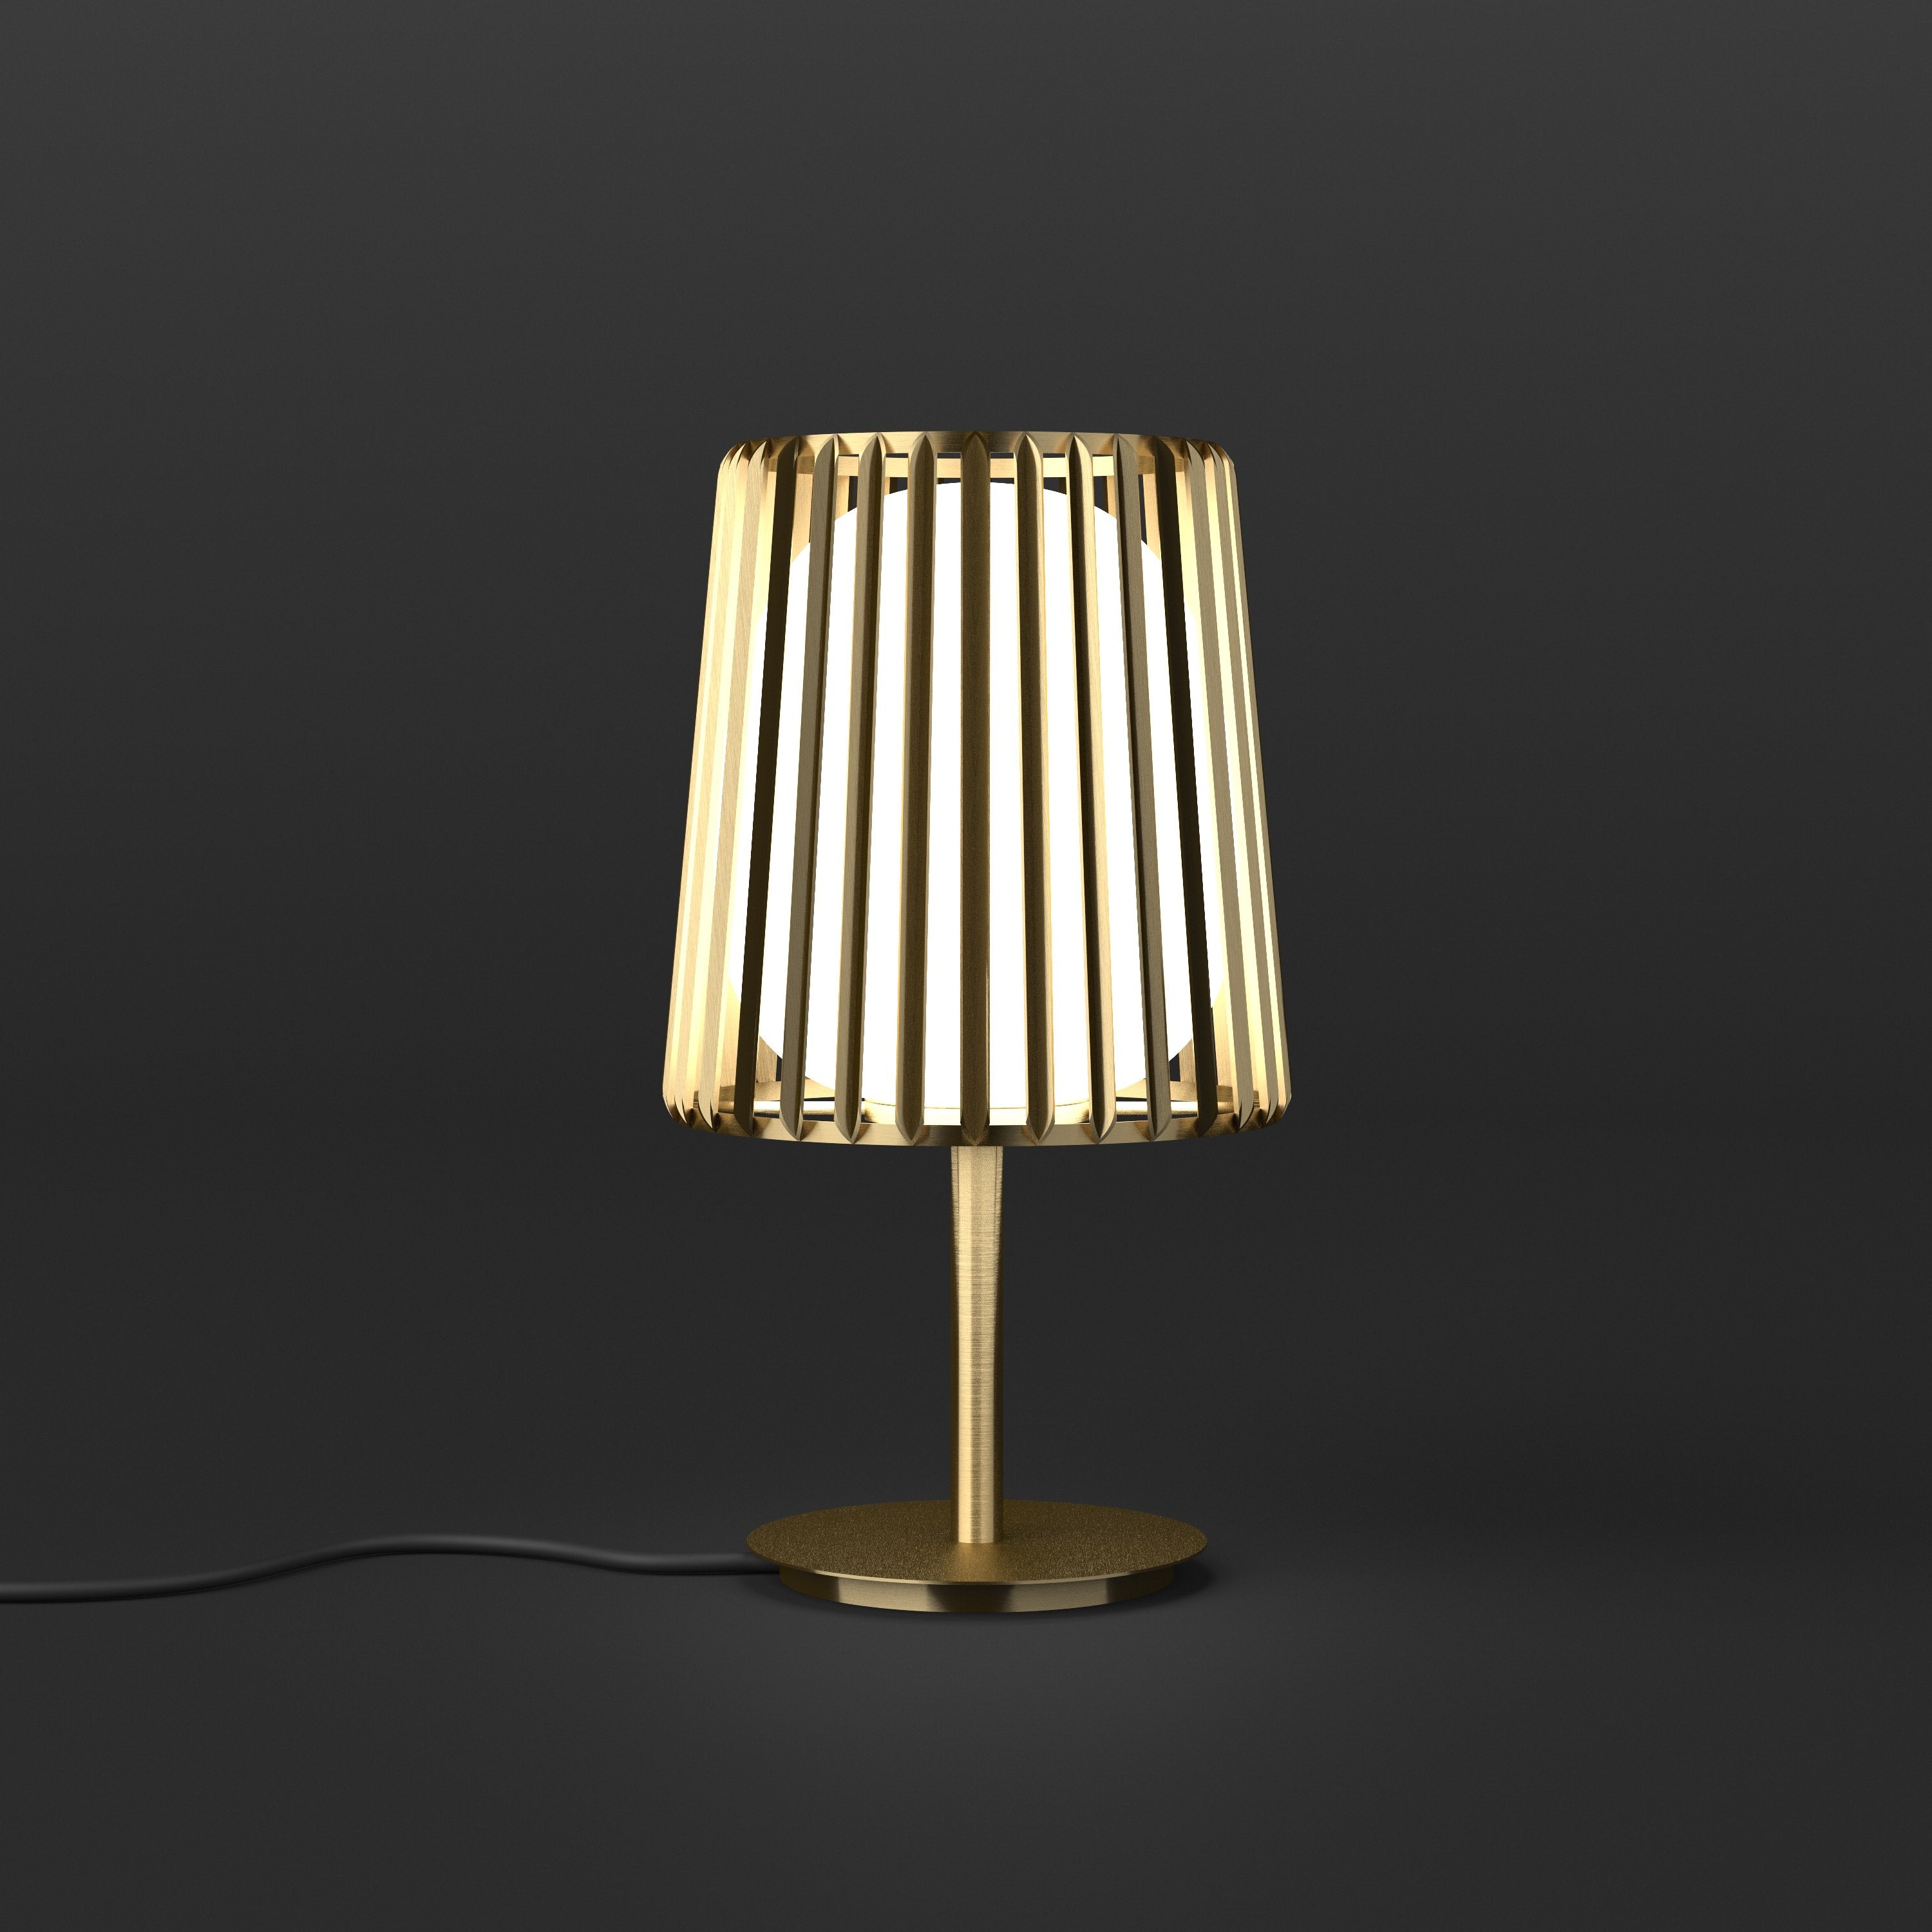 kapitalisme Westers Eerlijk Quasar Julia table lamp - buy luxury LED design lighting